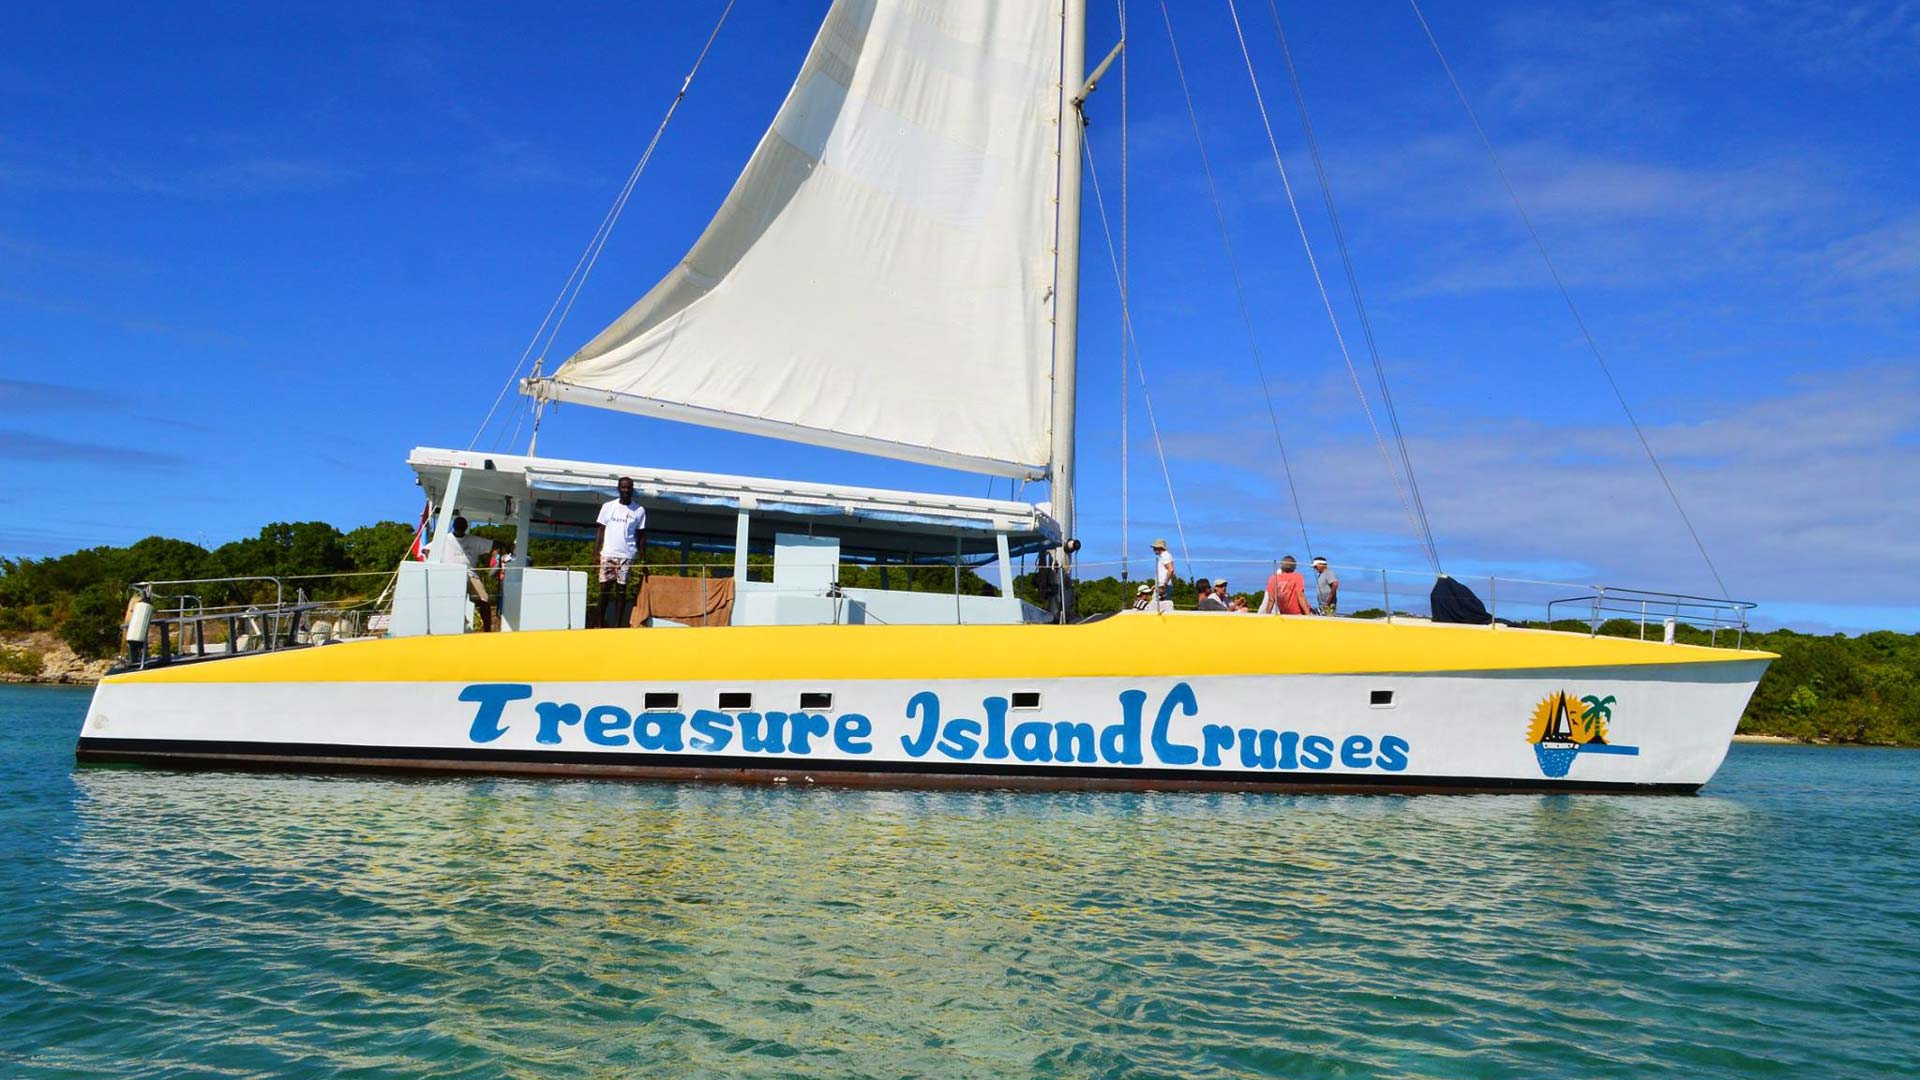 Treasure Island Cruises cat from side